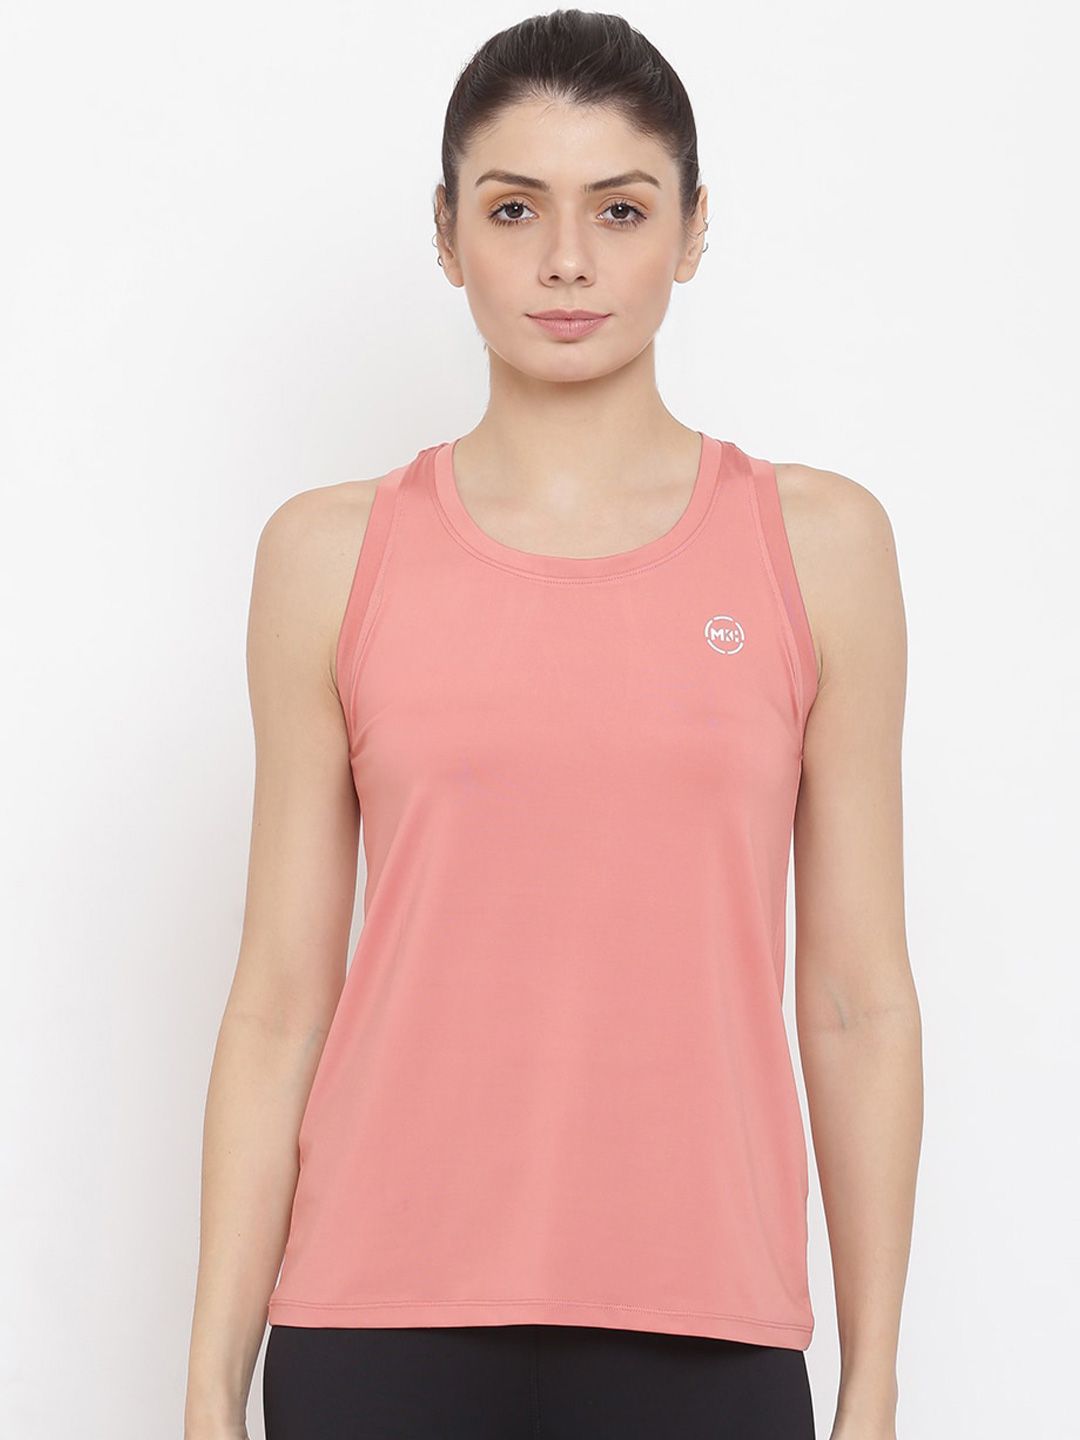 MKH Women Pink Dri-FIT T-shirt Price in India